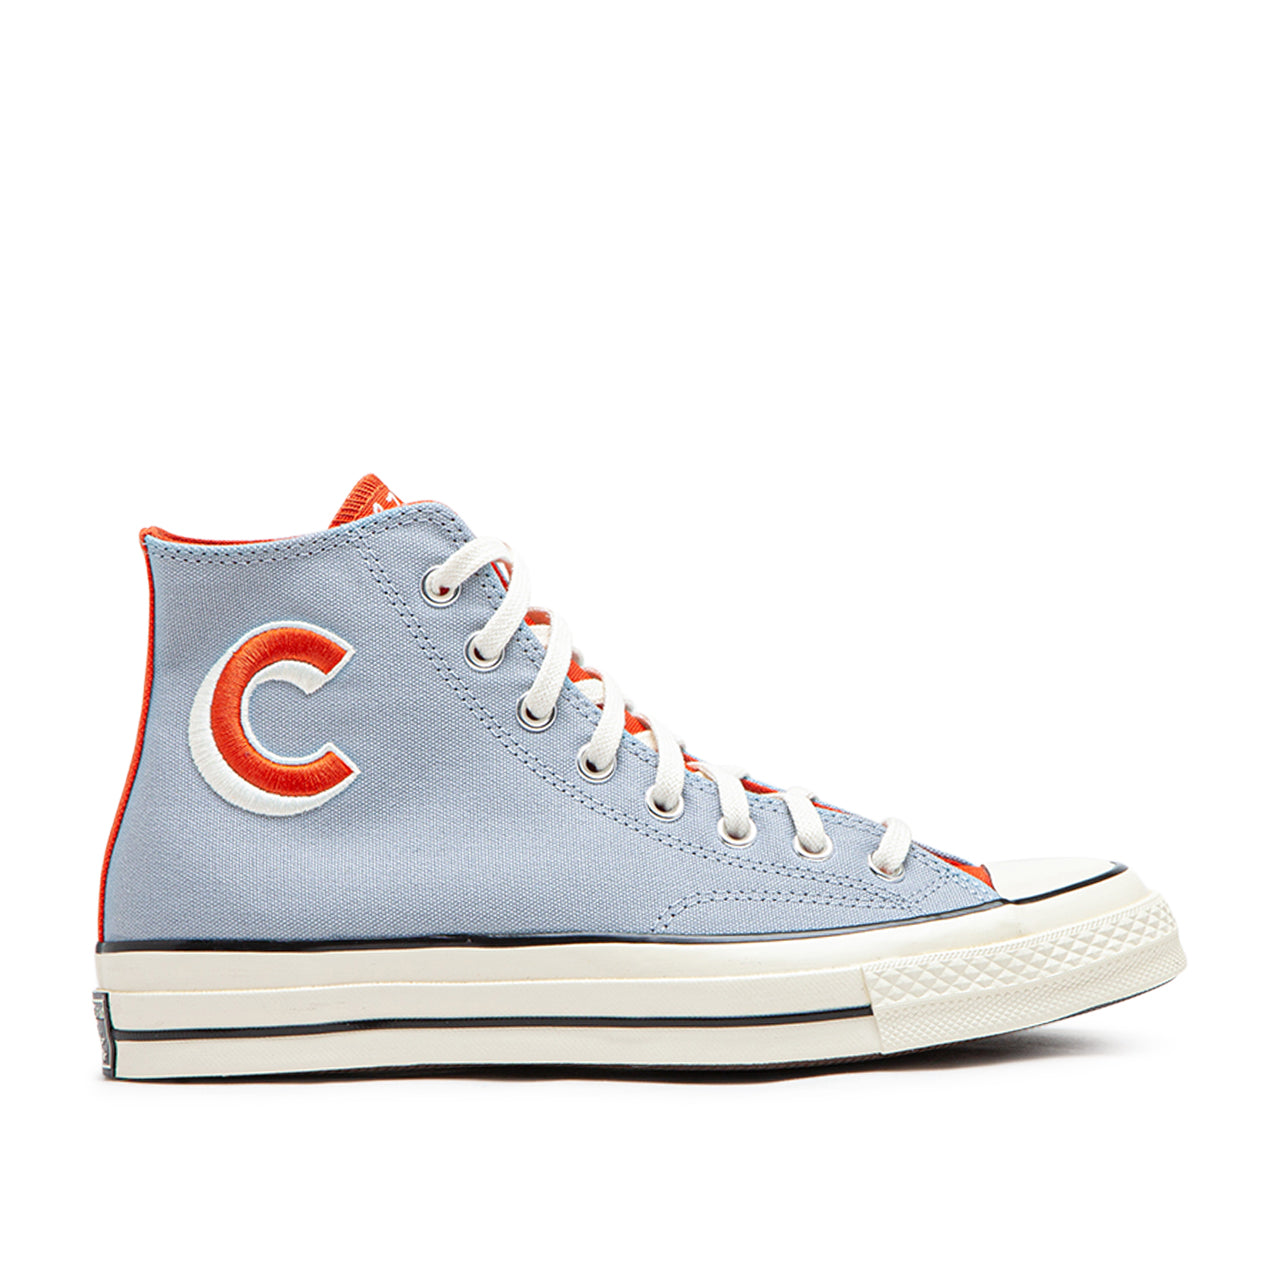 Converse Chuck Taylor 70 Hi (Blau / Weiß / Orange)  - Cheap Juzsports Jordan Outlet